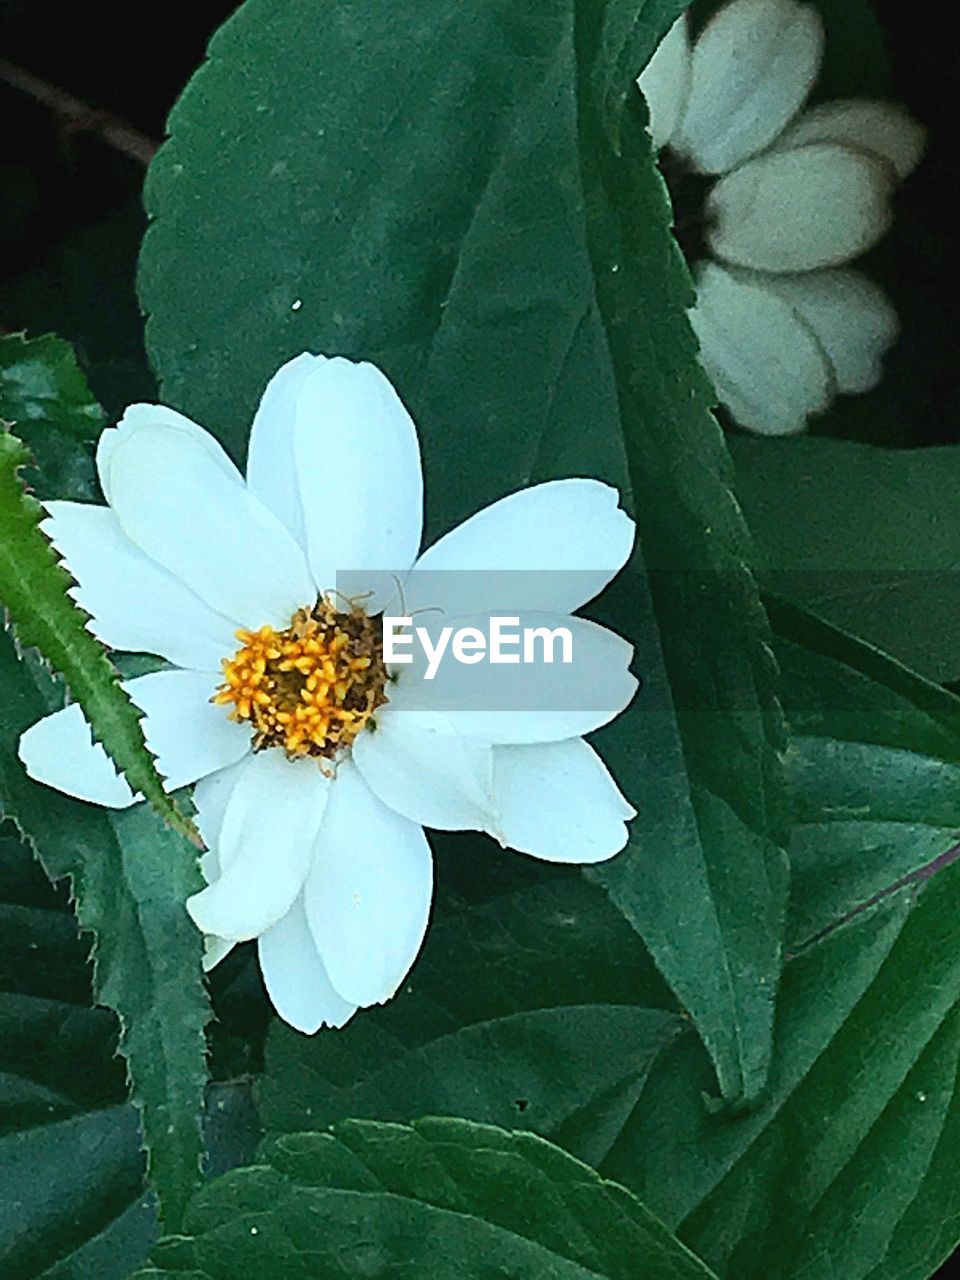 CLOSE-UP OF HONEY BEE ON FLOWER